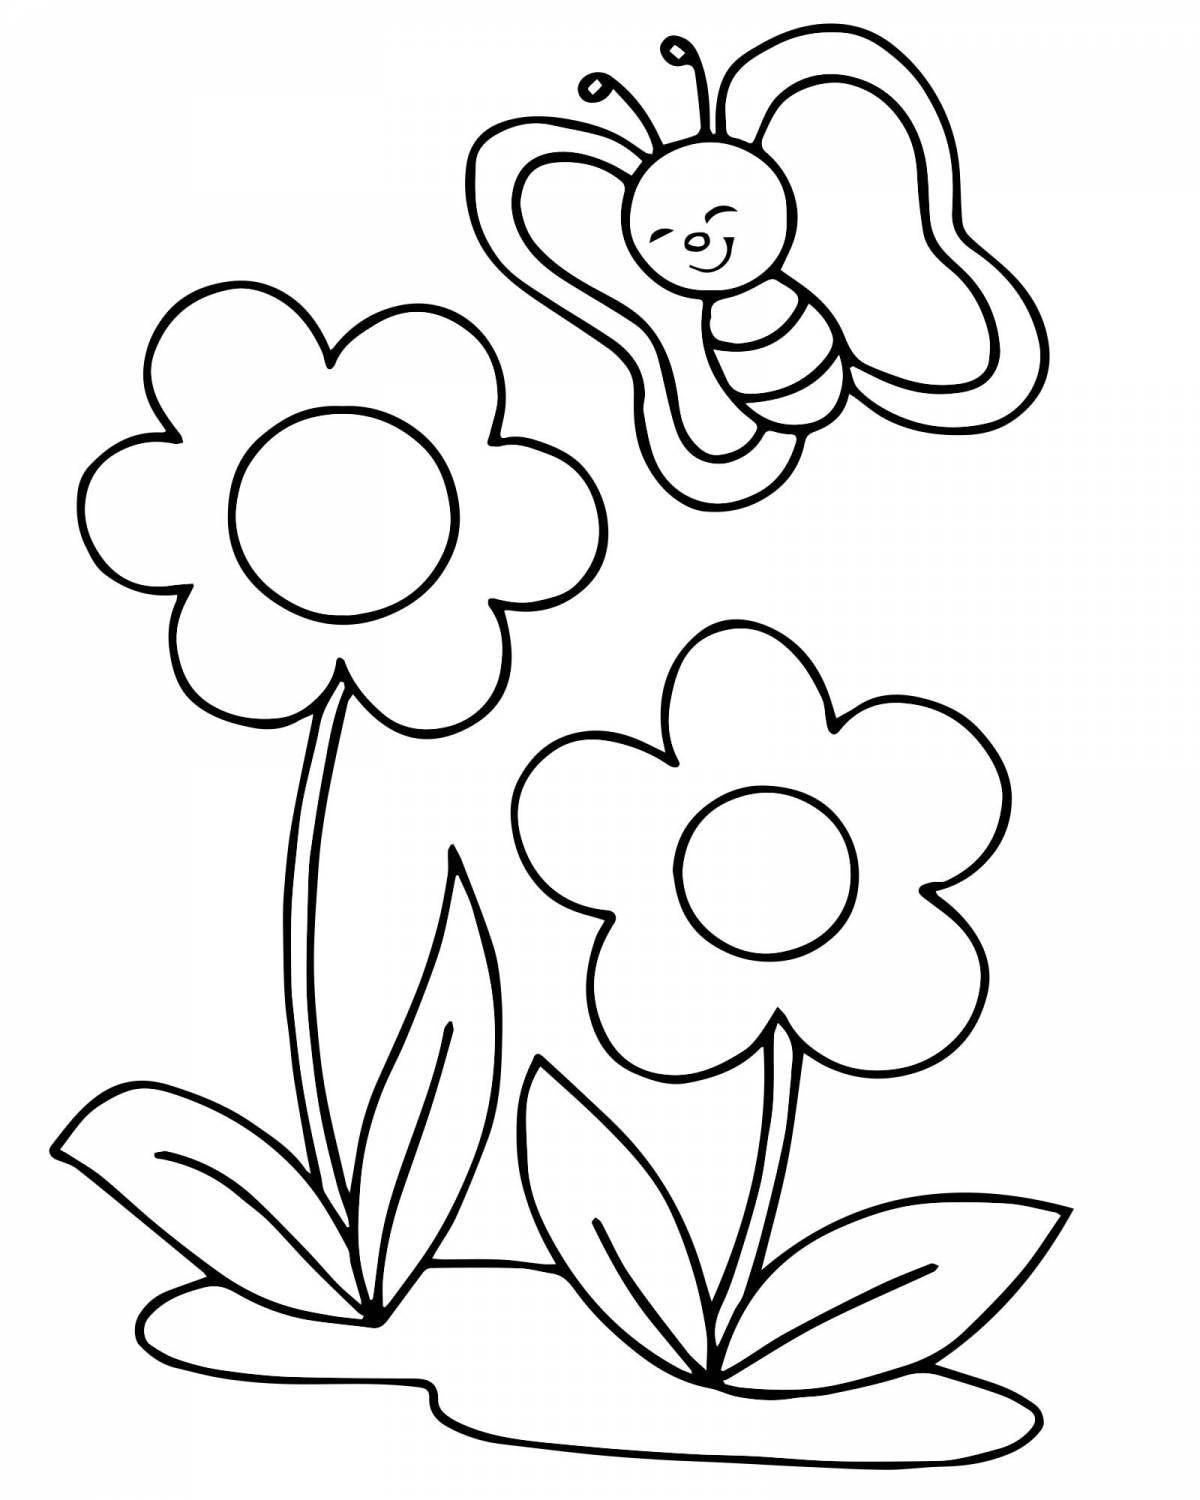 Безмятежная раскраска цветы для детей 4-5 лет